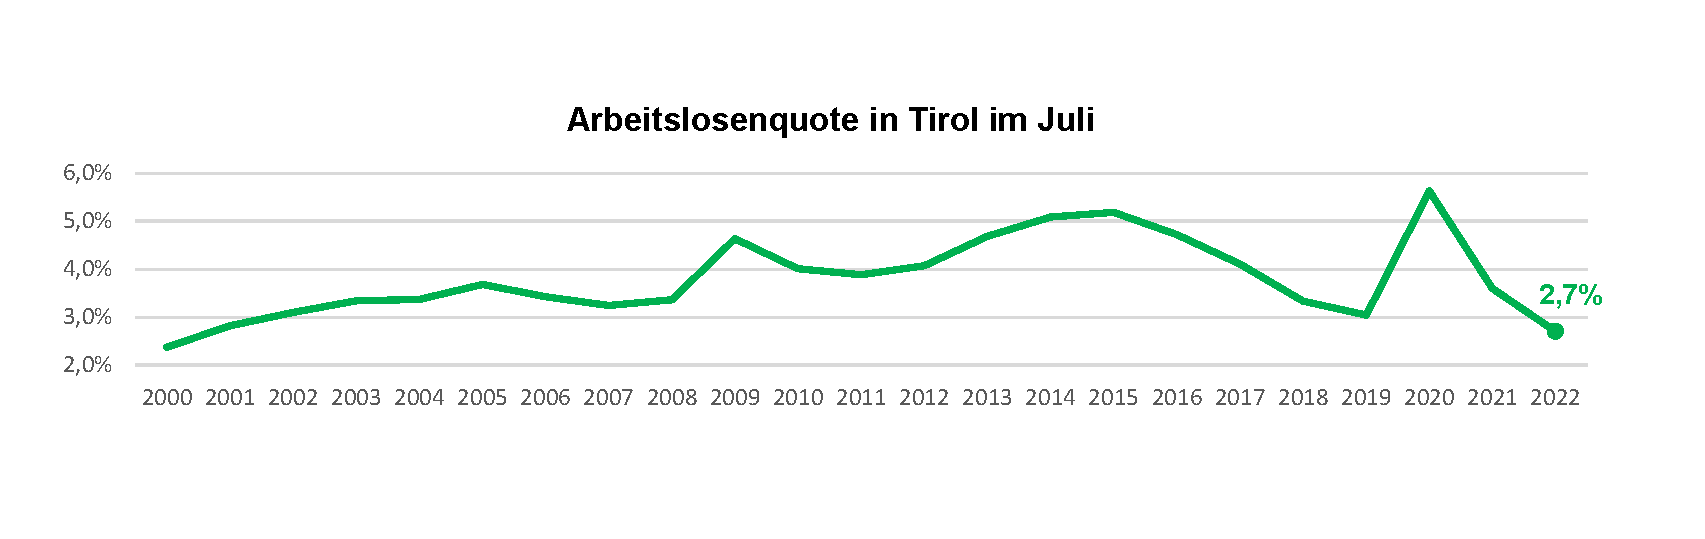 AL Tirol Juli 2000 bis 2022